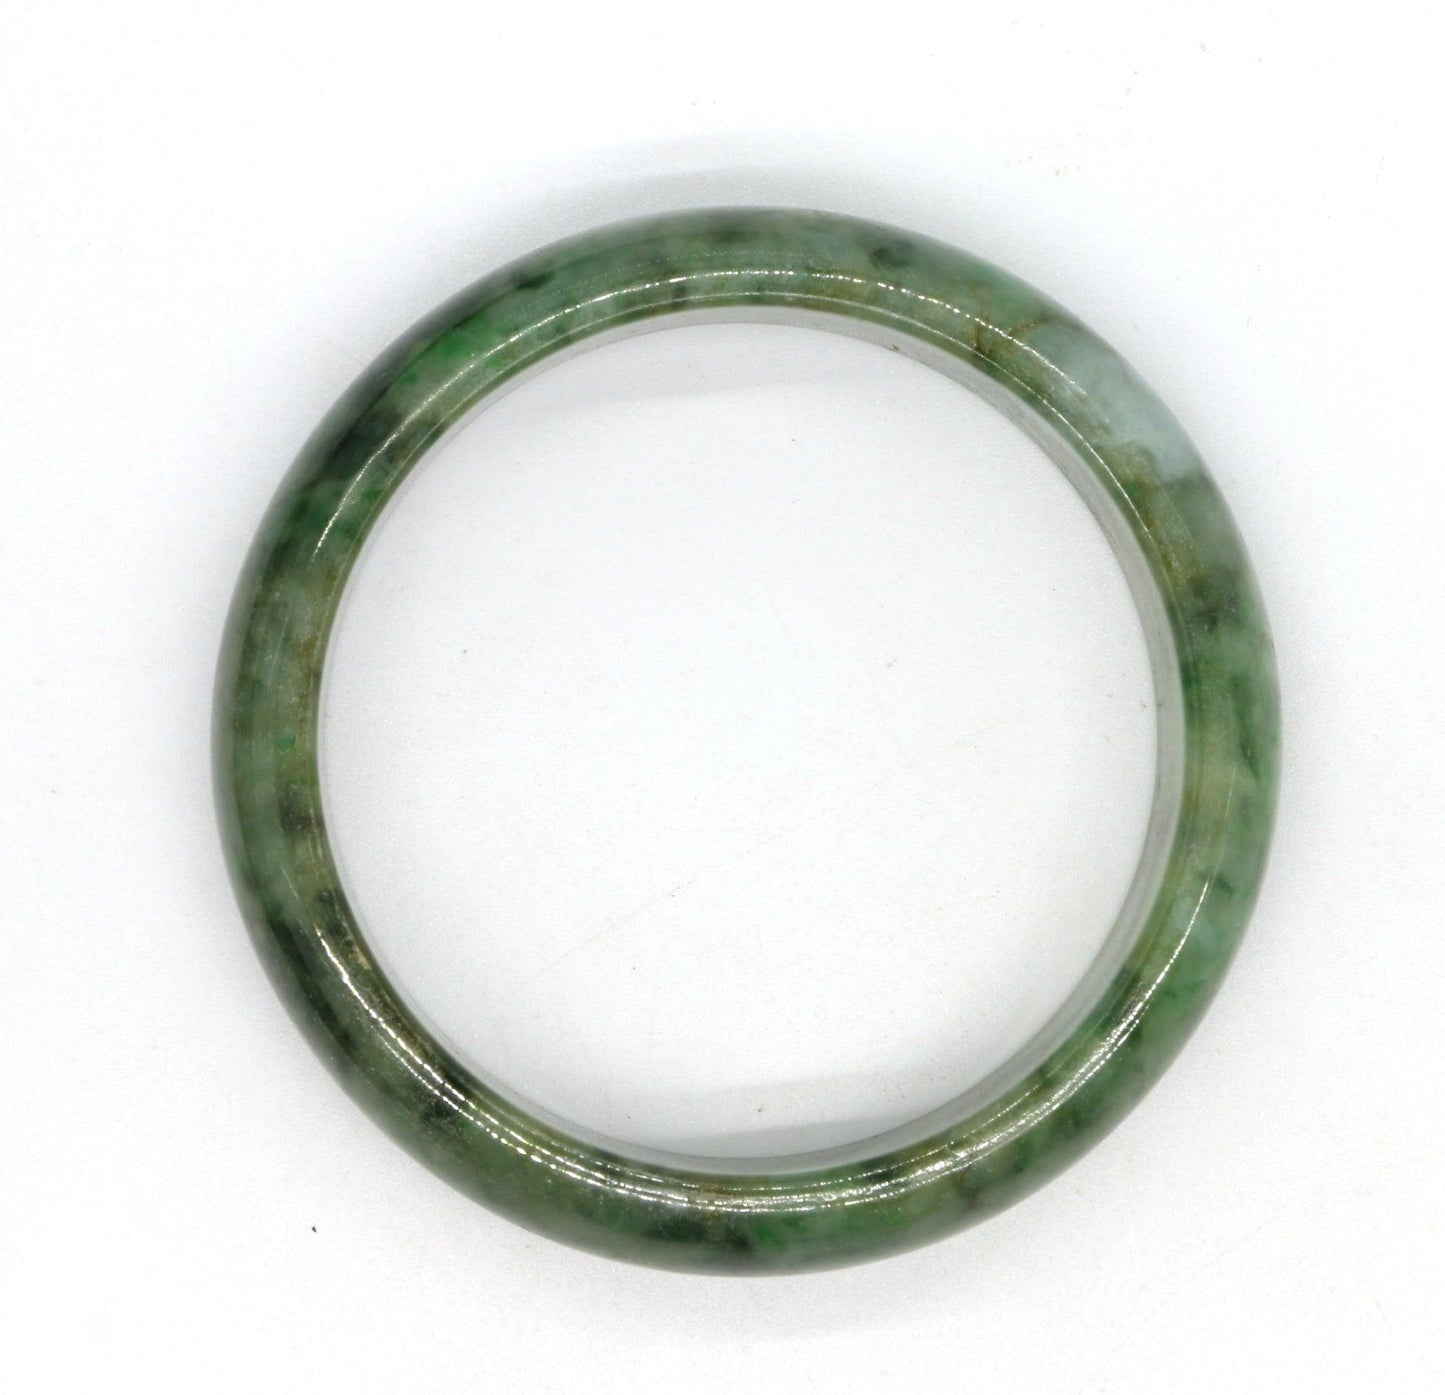 Type A Certified Jadeite Jade Bangle Size 56 -58mm B0BN9RFK47 - Jade-collector.com